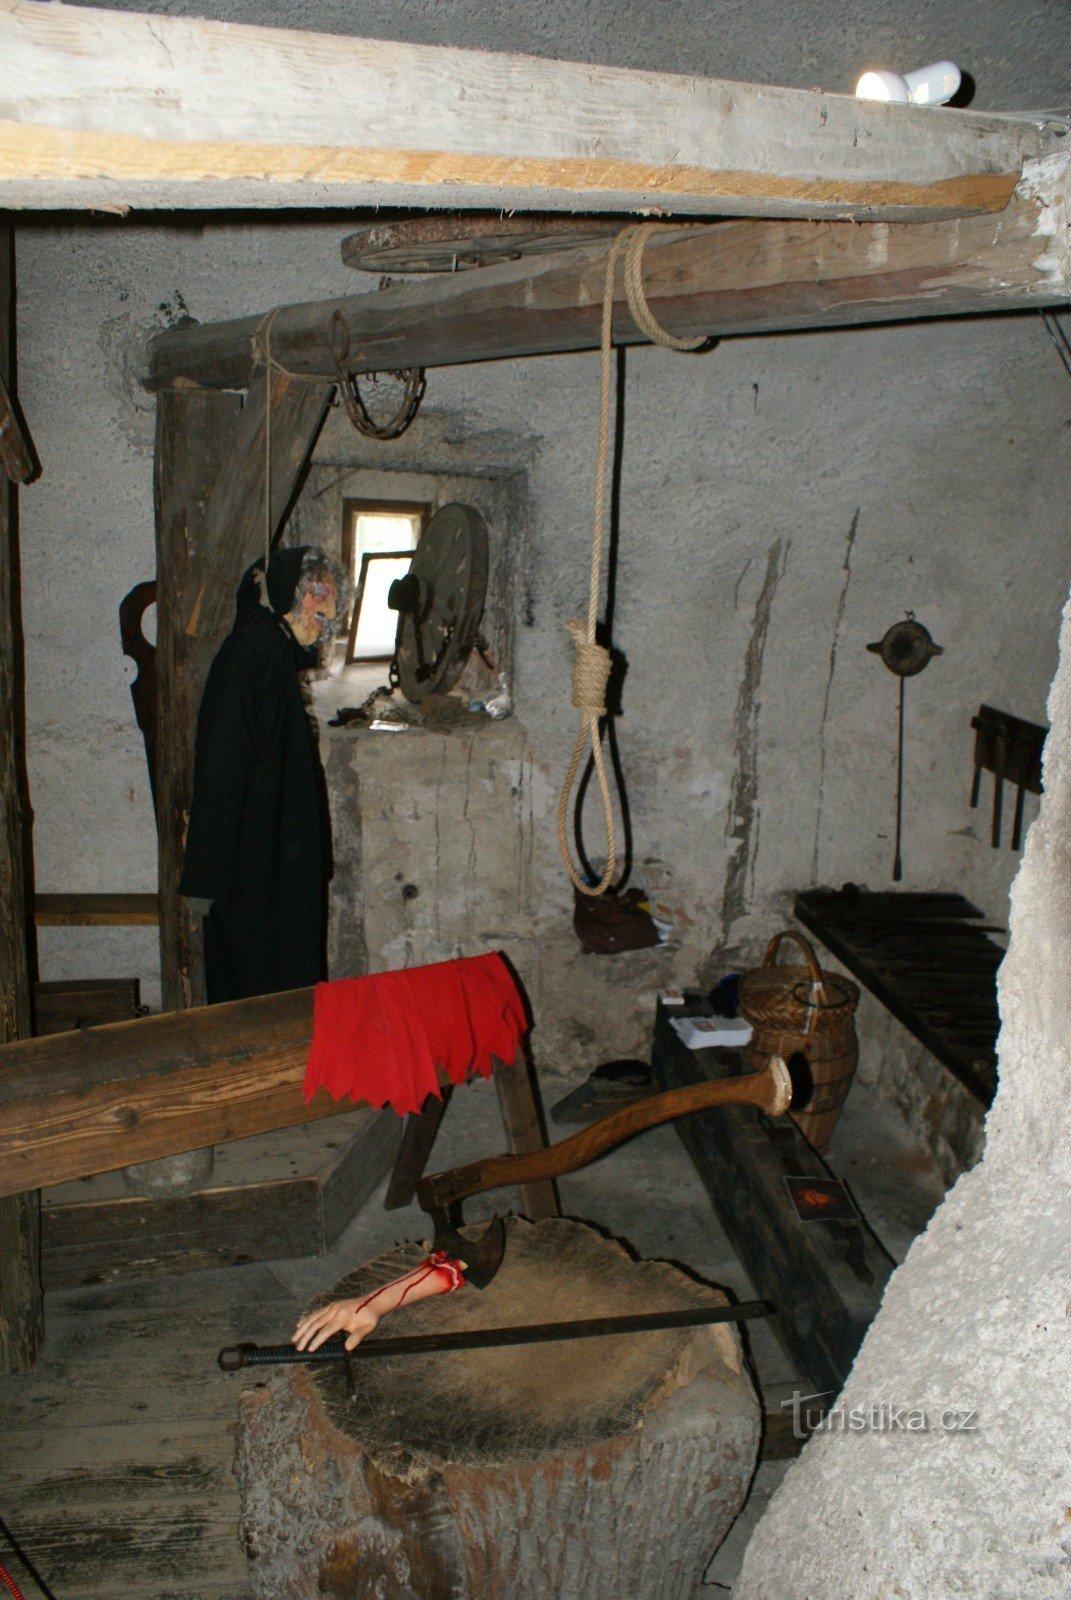 Rožmberk nad Vltavou - Execution House (Museum of Capital Justice)